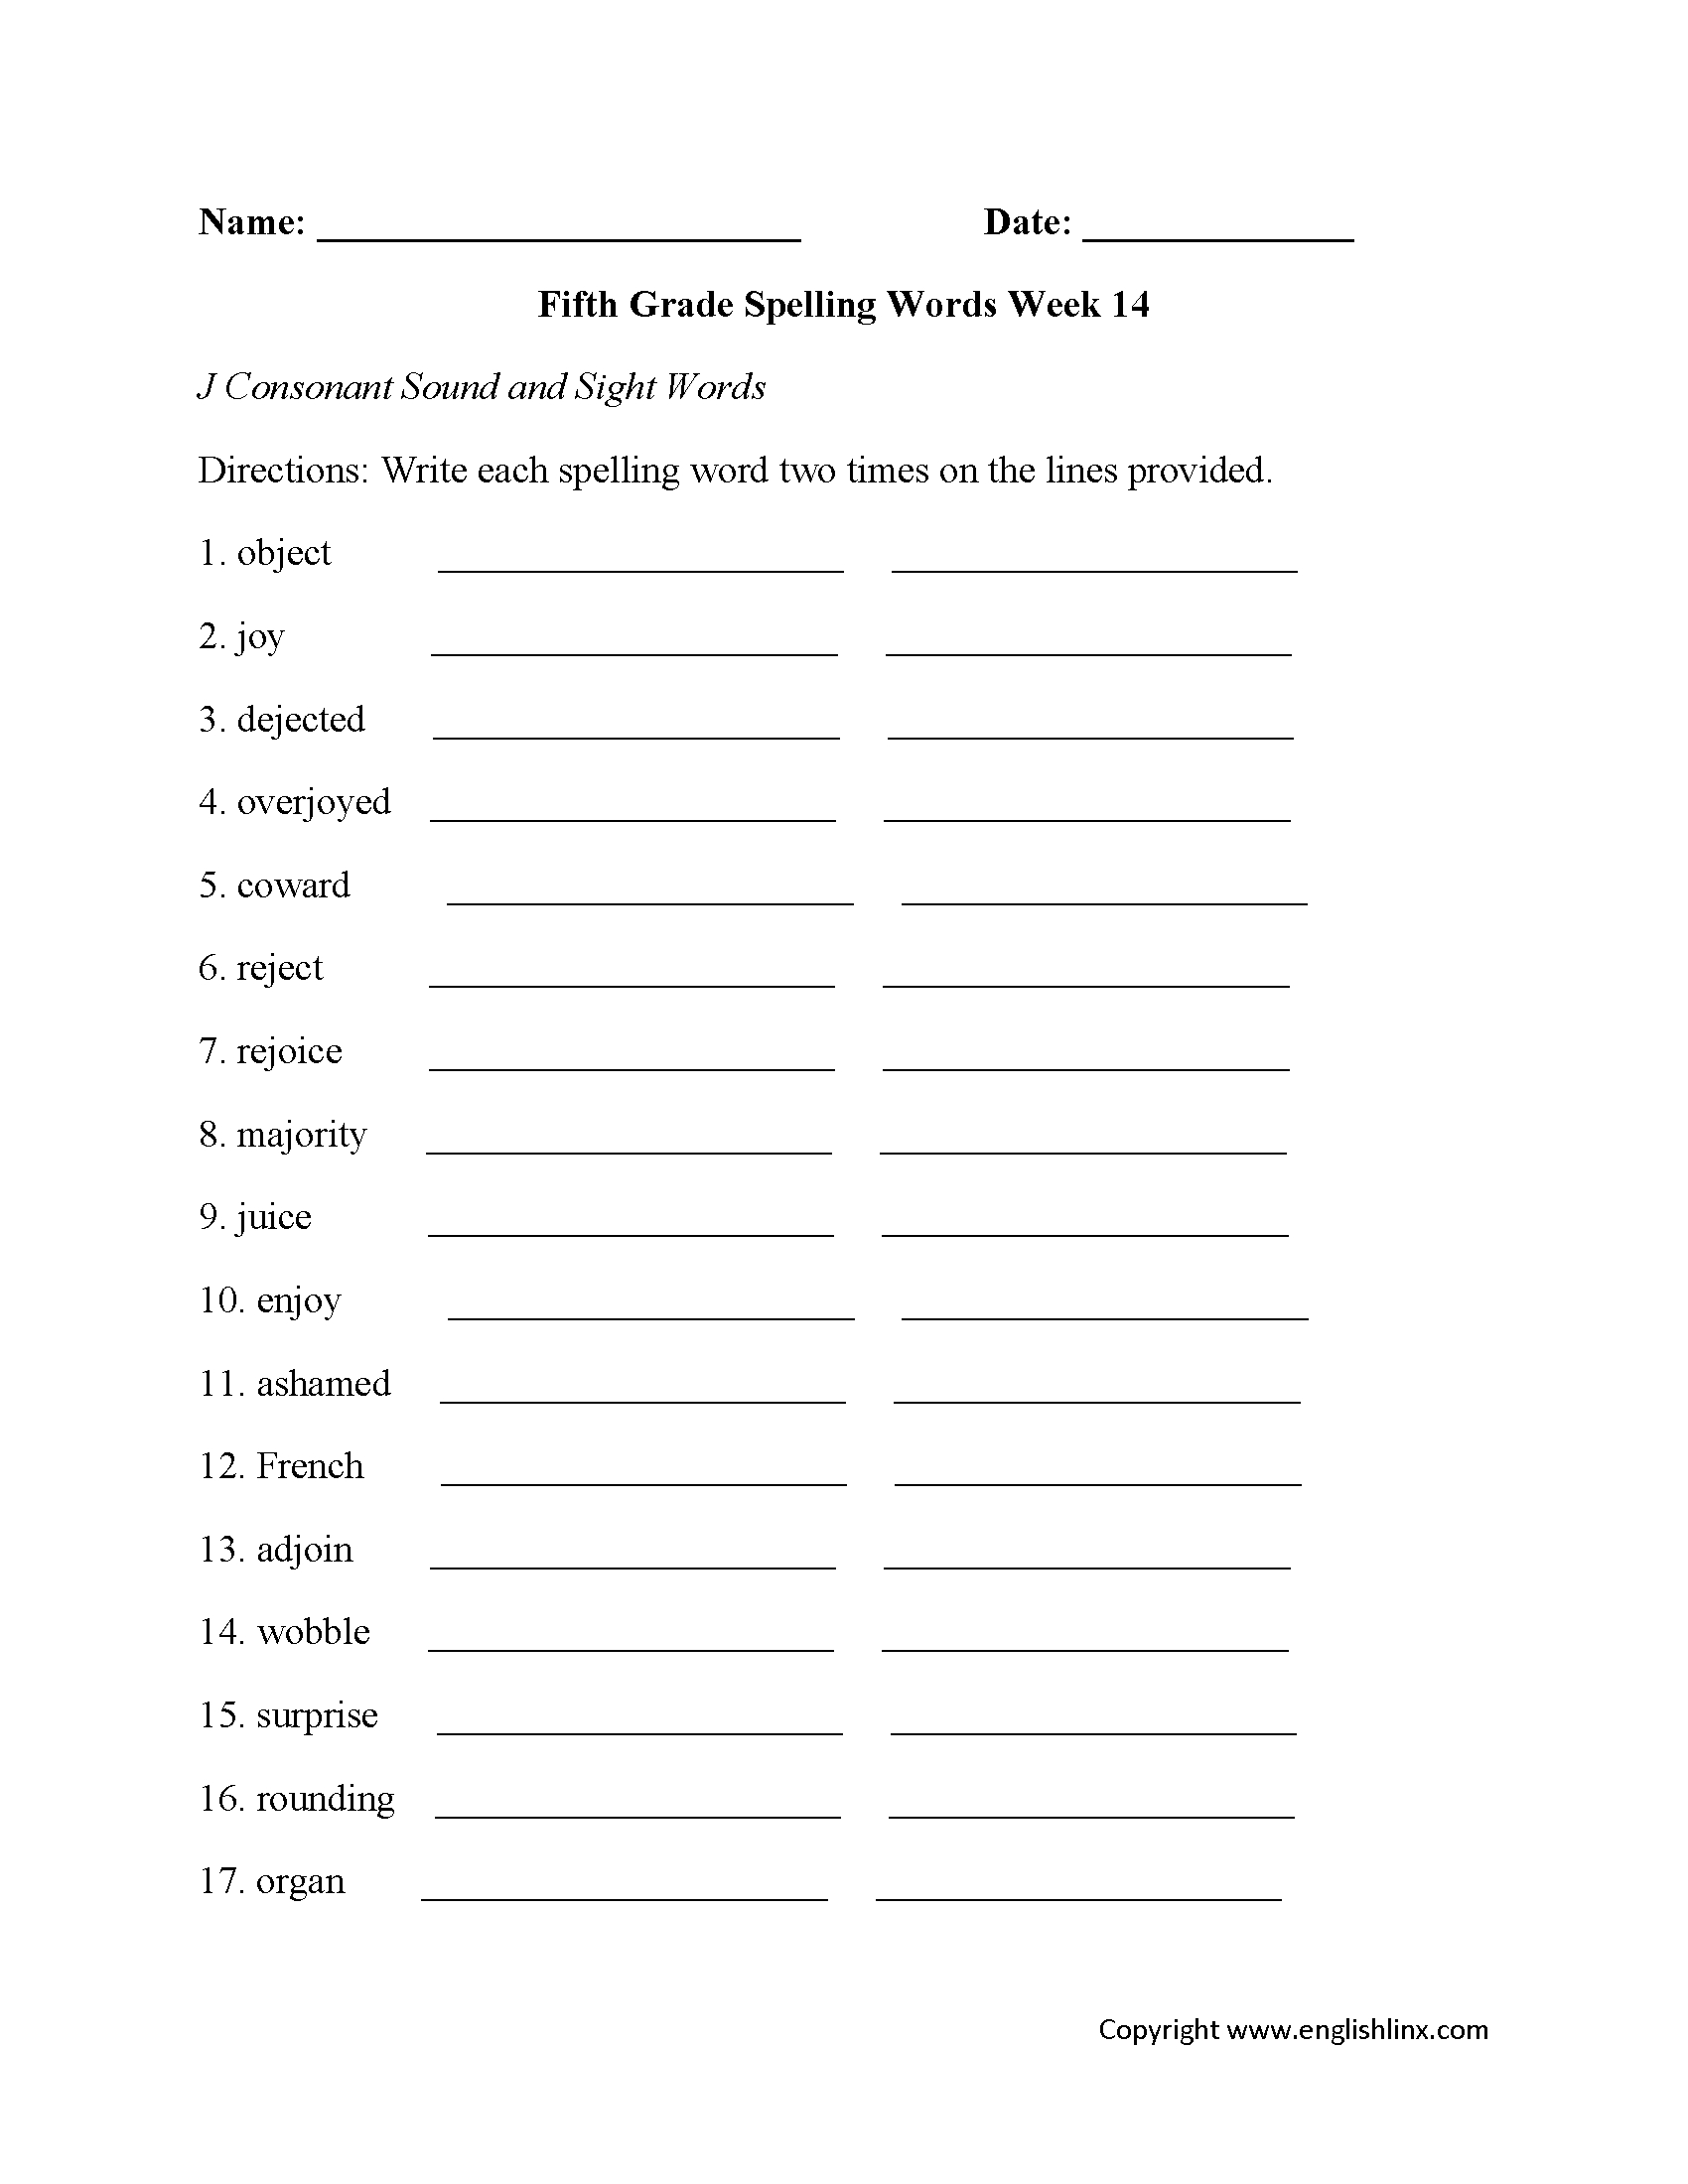 Spelling Worksheets | Fifth Grade Spelling Worksheets - Free Printable Spelling Worksheets For 5Th Grade